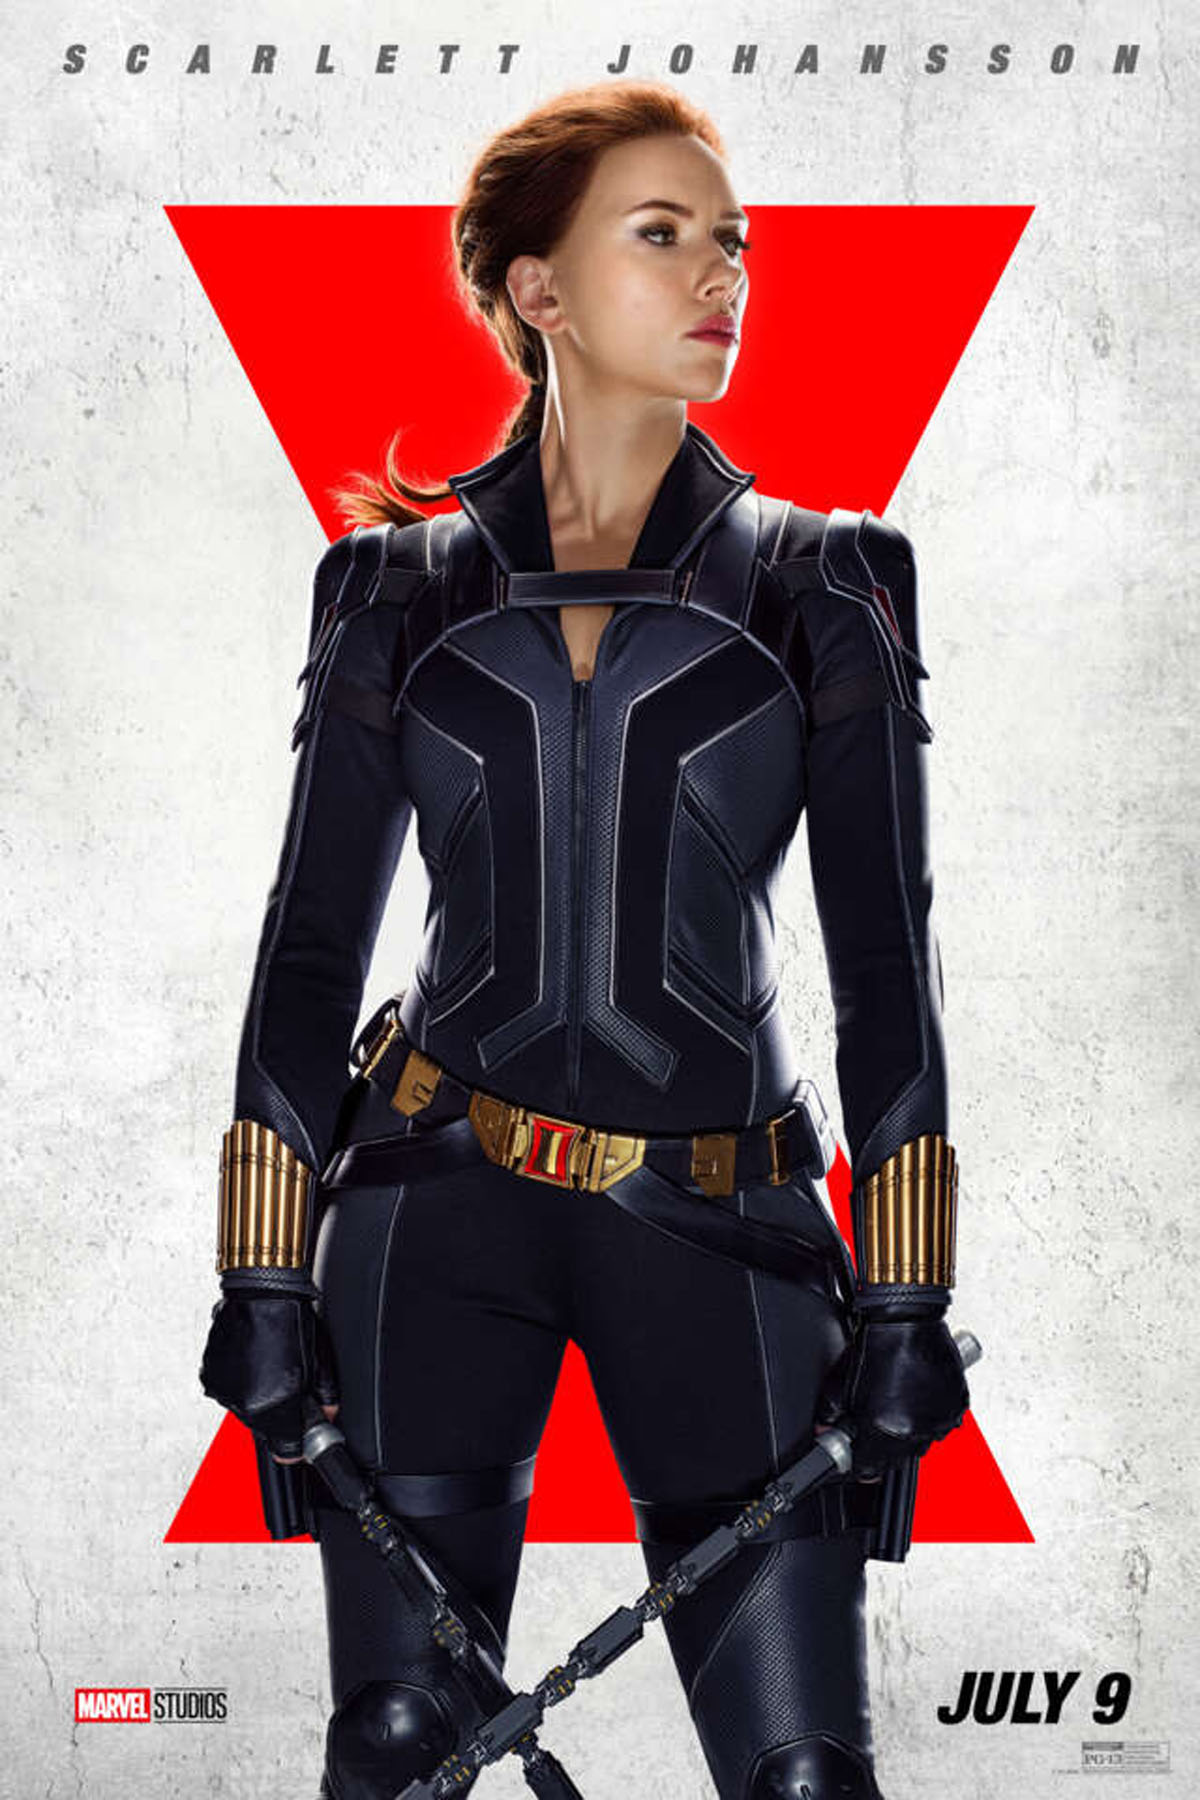 Scarlett Johansson as Natasha Romanoff / Black Widow: